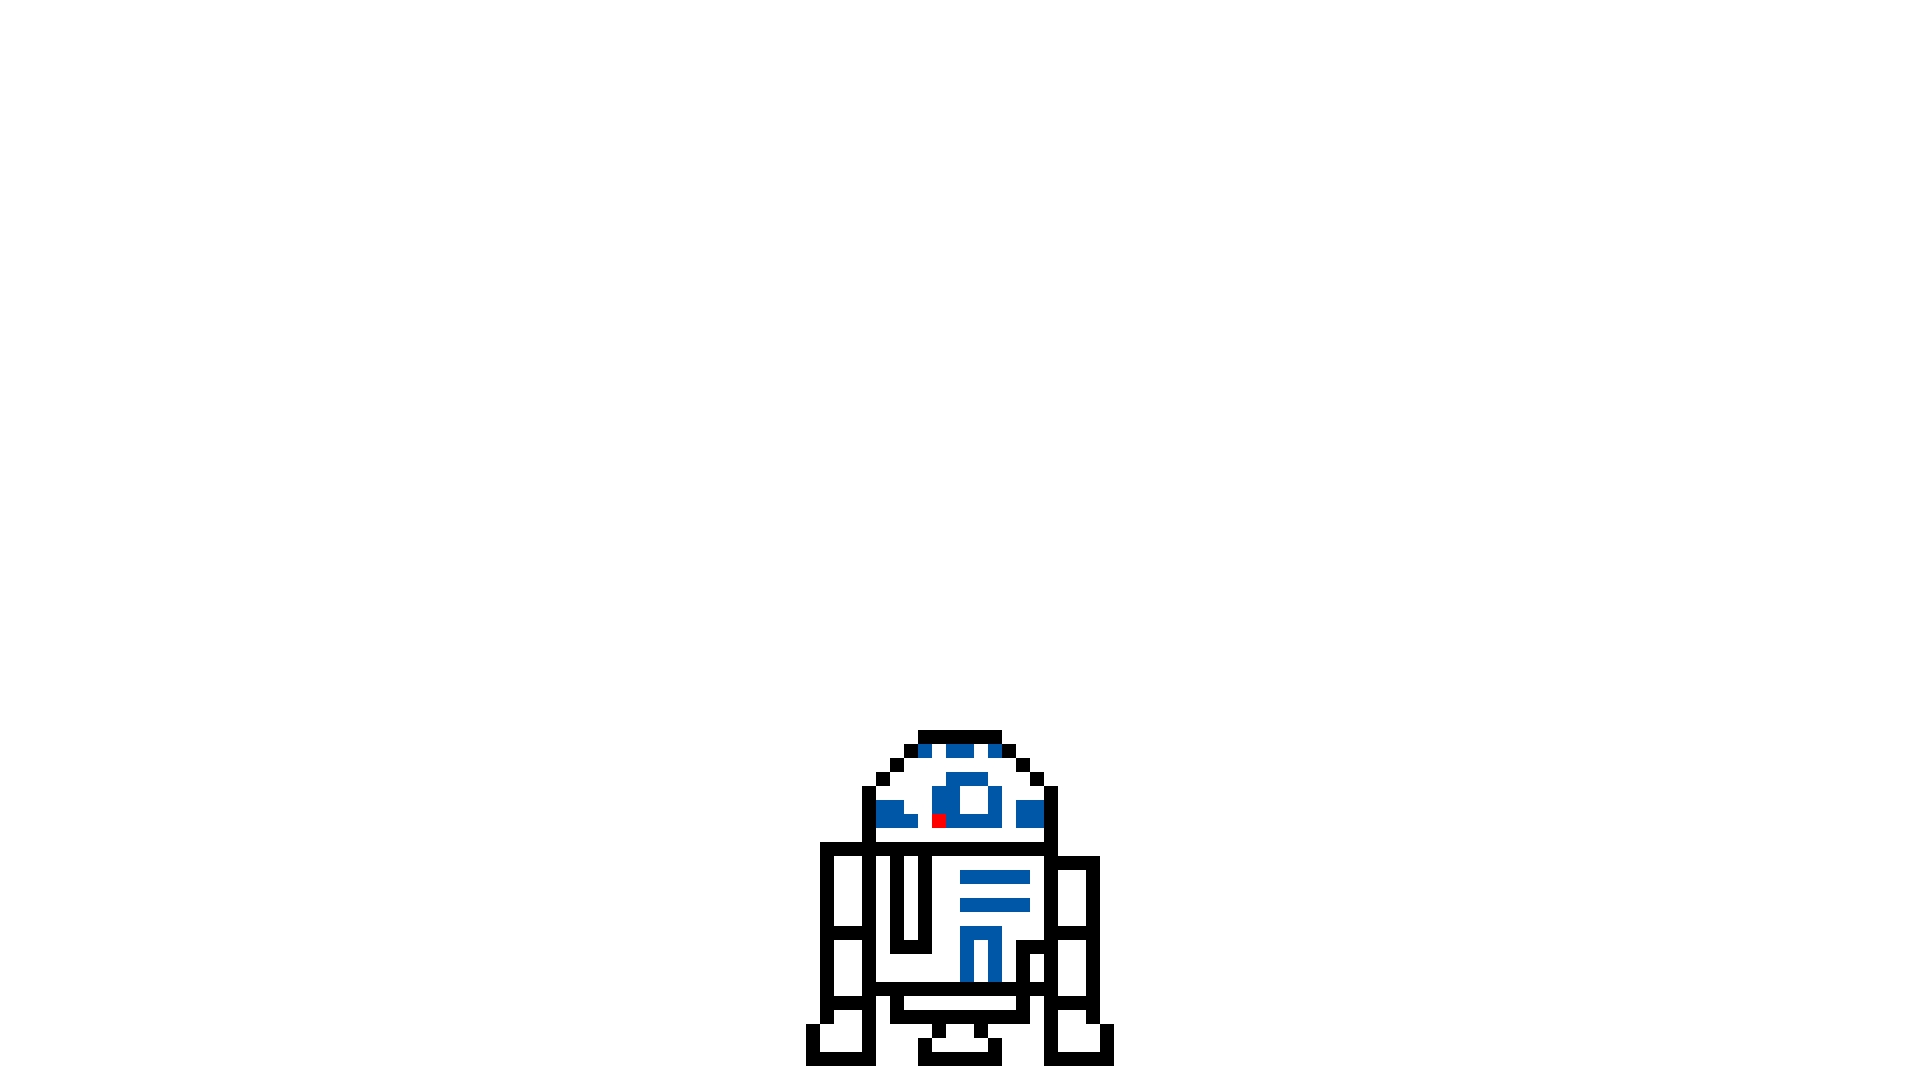 Desktop Wallpaper R2 D2 Star Wars Pixel Art Hd Image Picture Background Egyss1